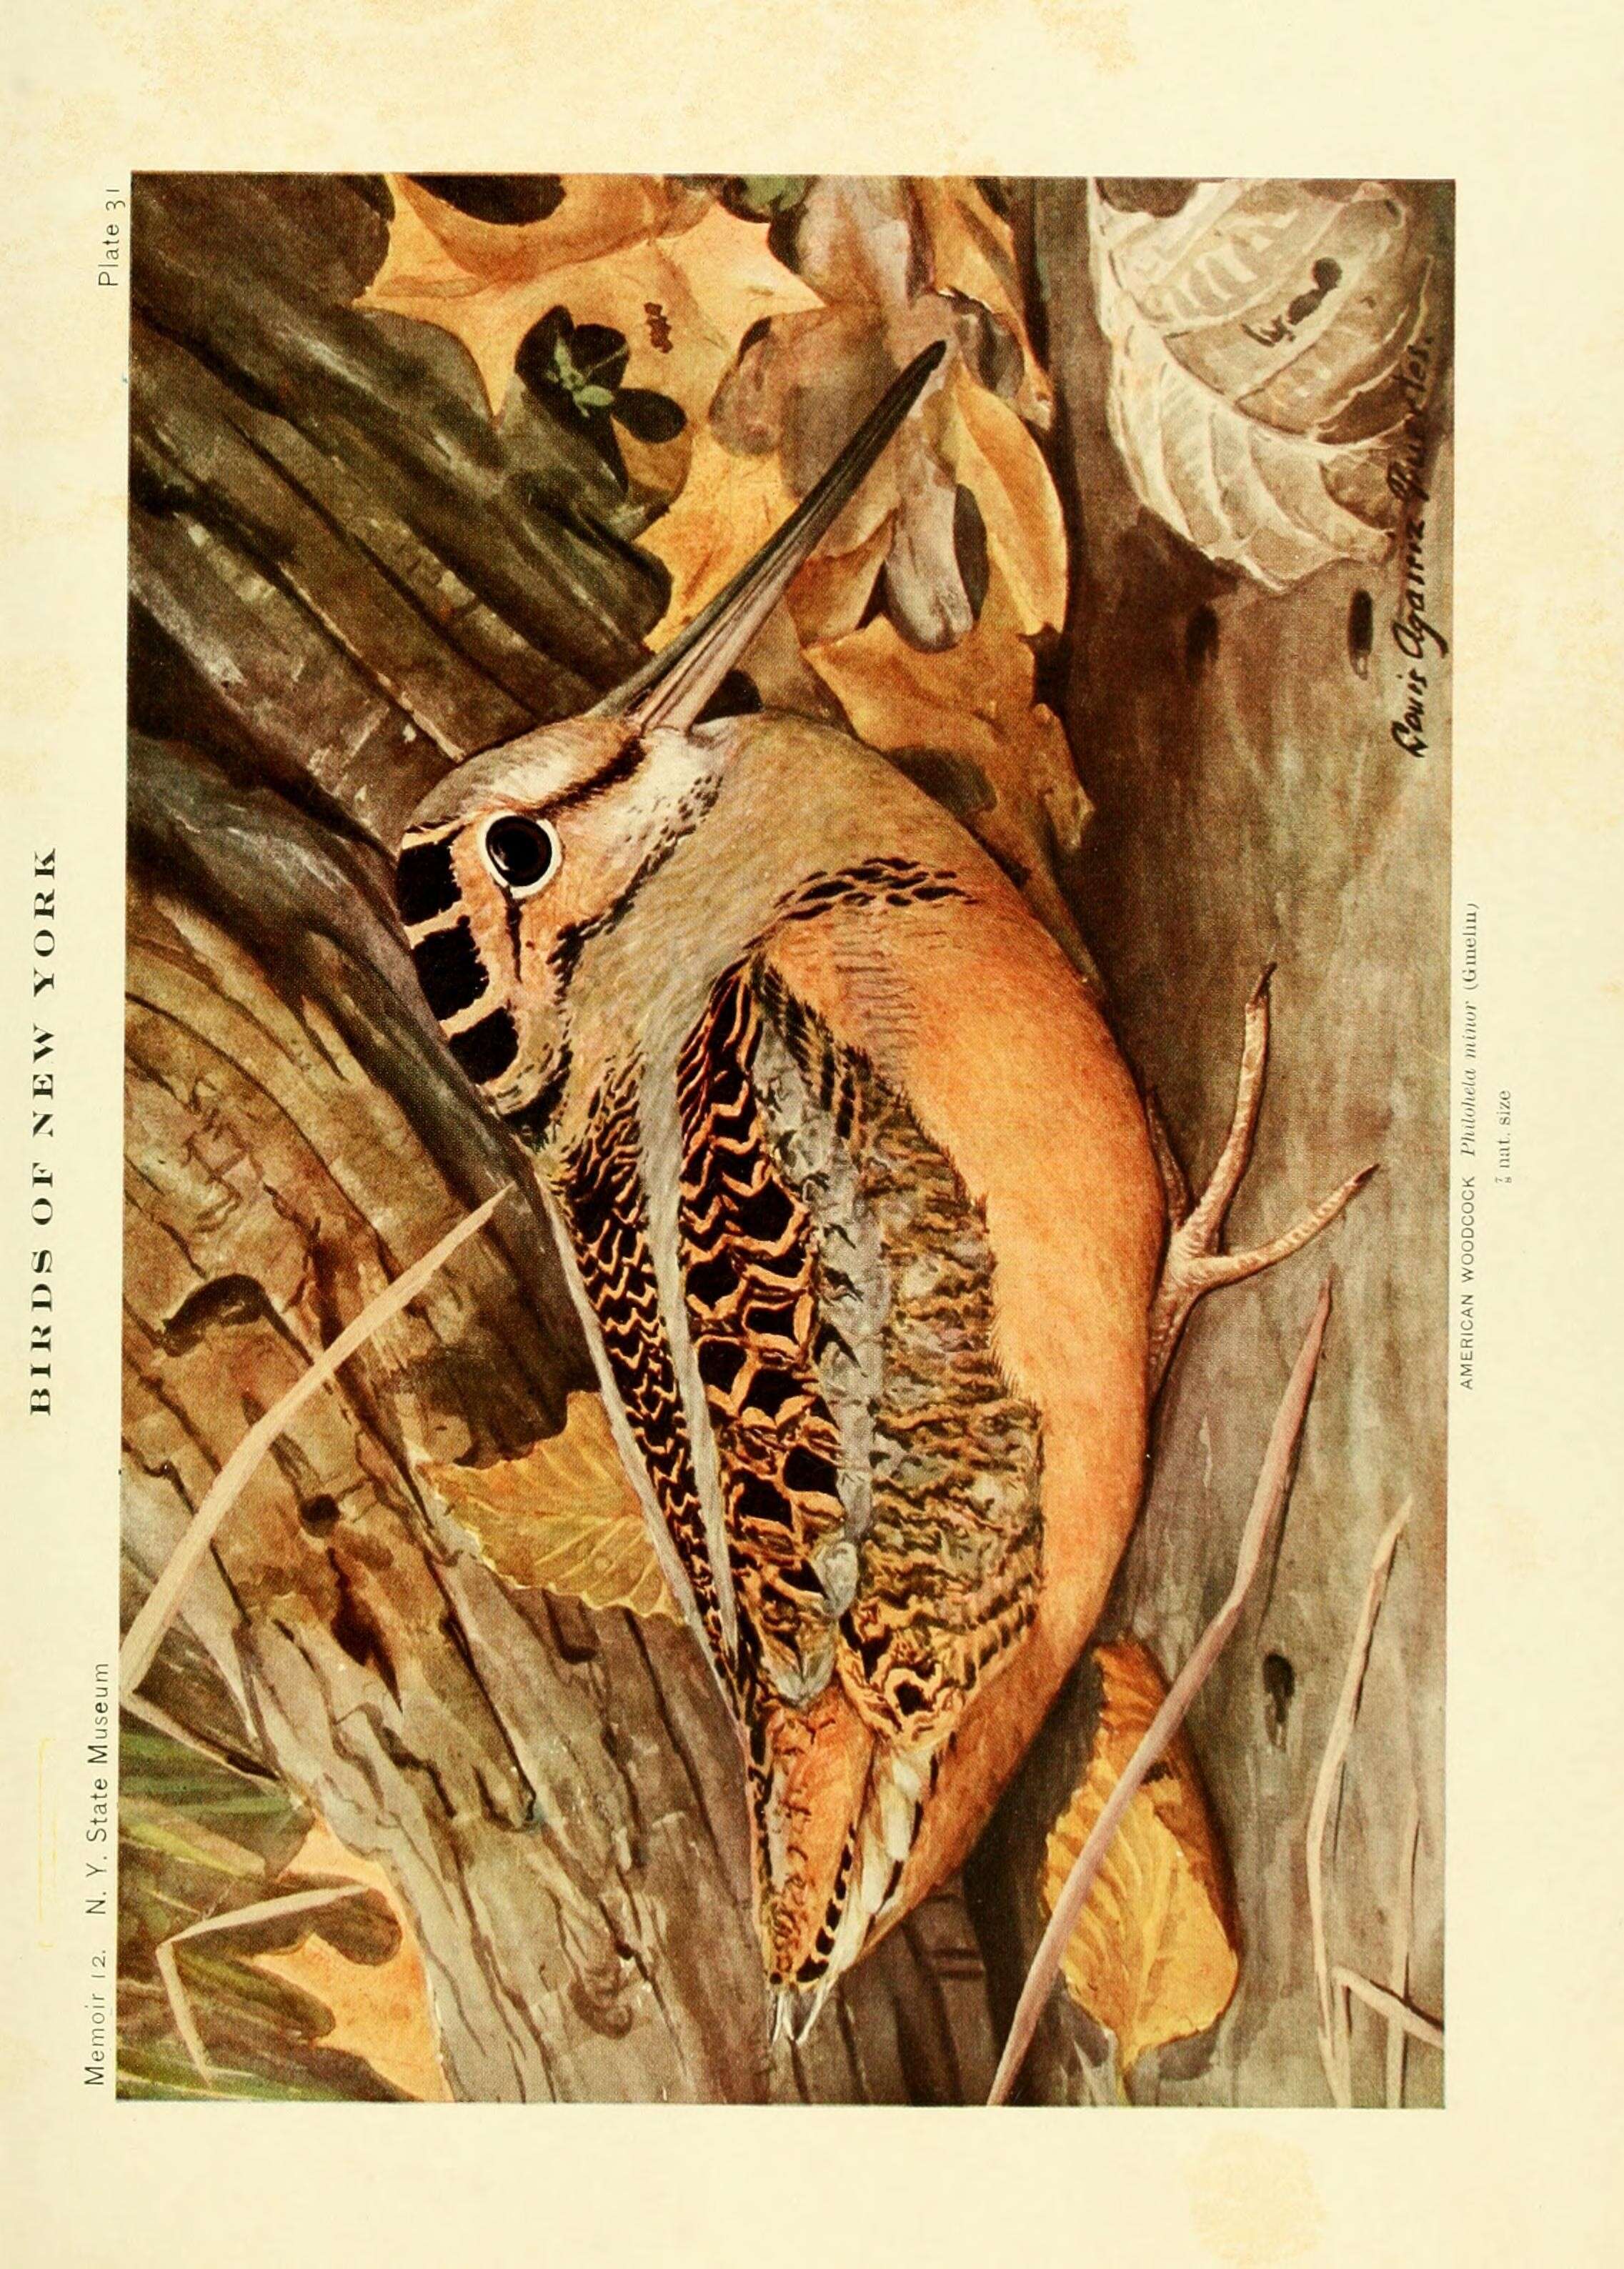 Image of Woodcock